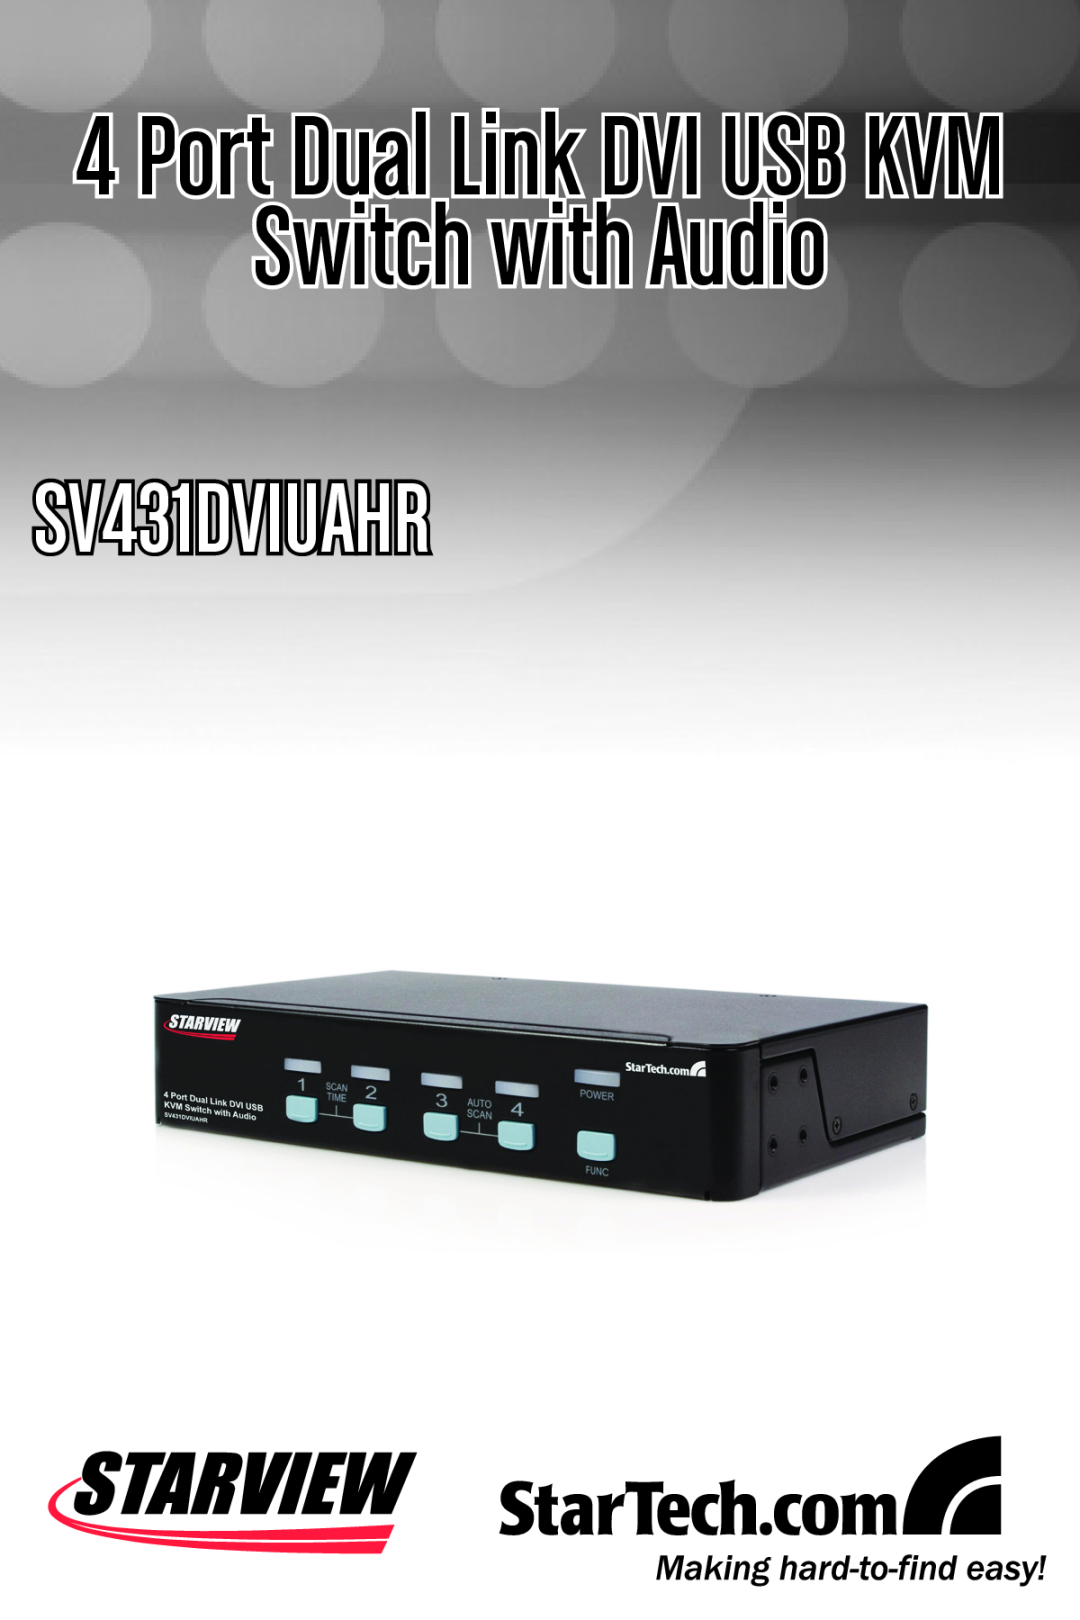 StarTech.com SV431DVIUAHR manual Switch with Audio, Port Dual Link DVI USB KVM 